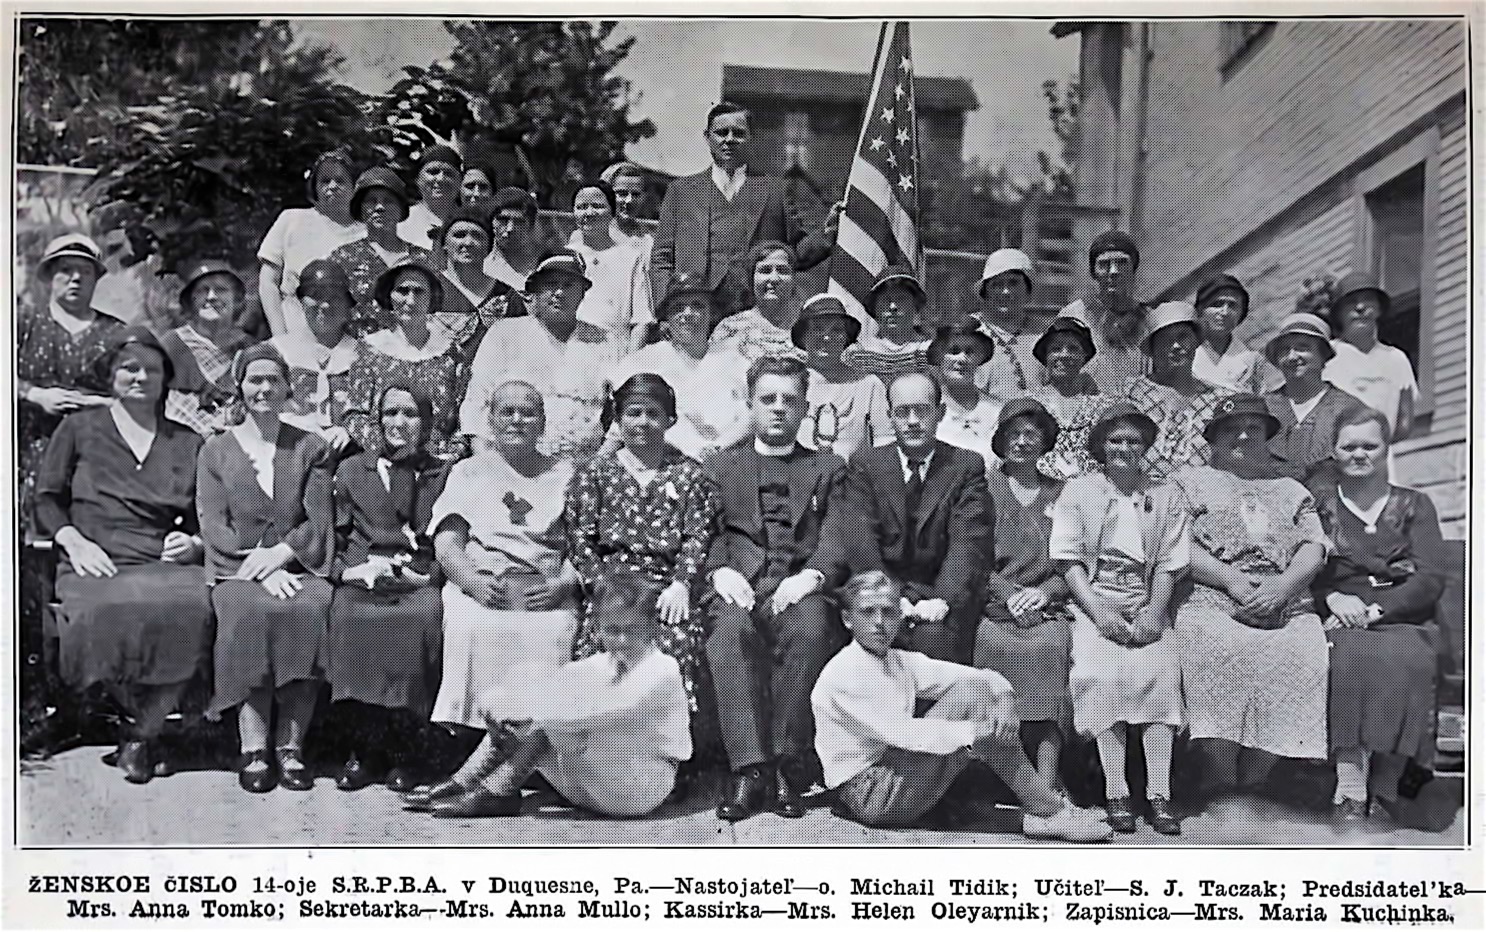 UROBA Women's Auxiliary in Duquesne, Pennsylvania